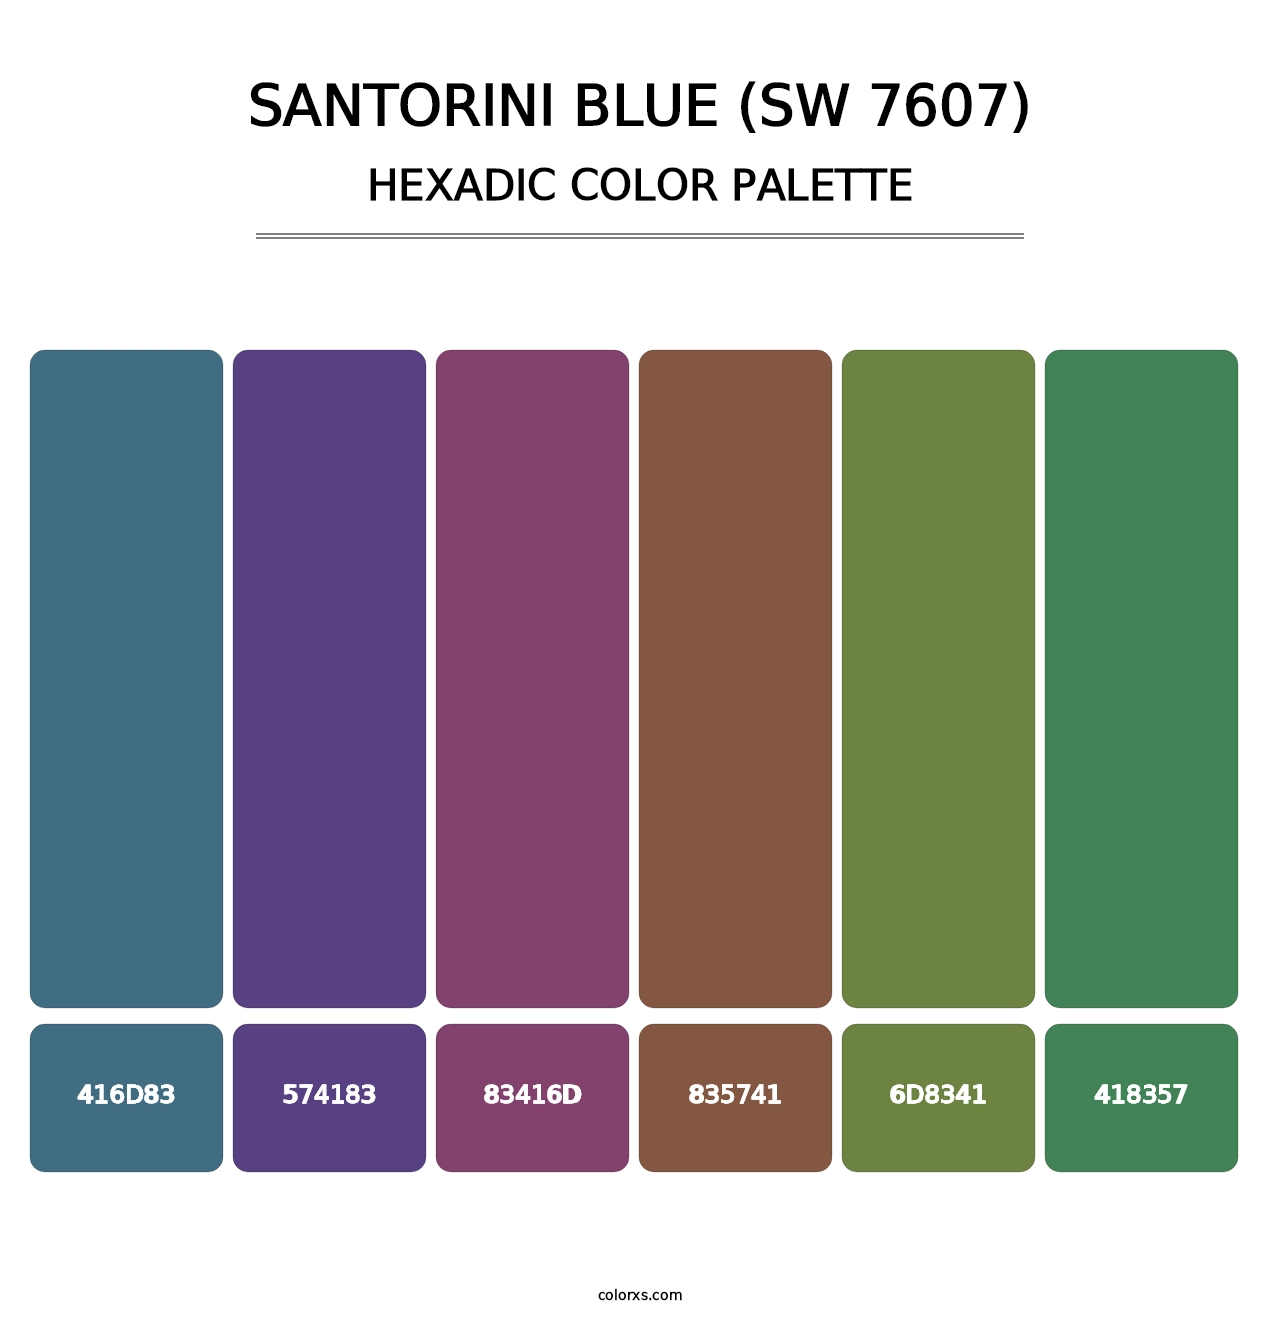 Santorini Blue (SW 7607) - Hexadic Color Palette